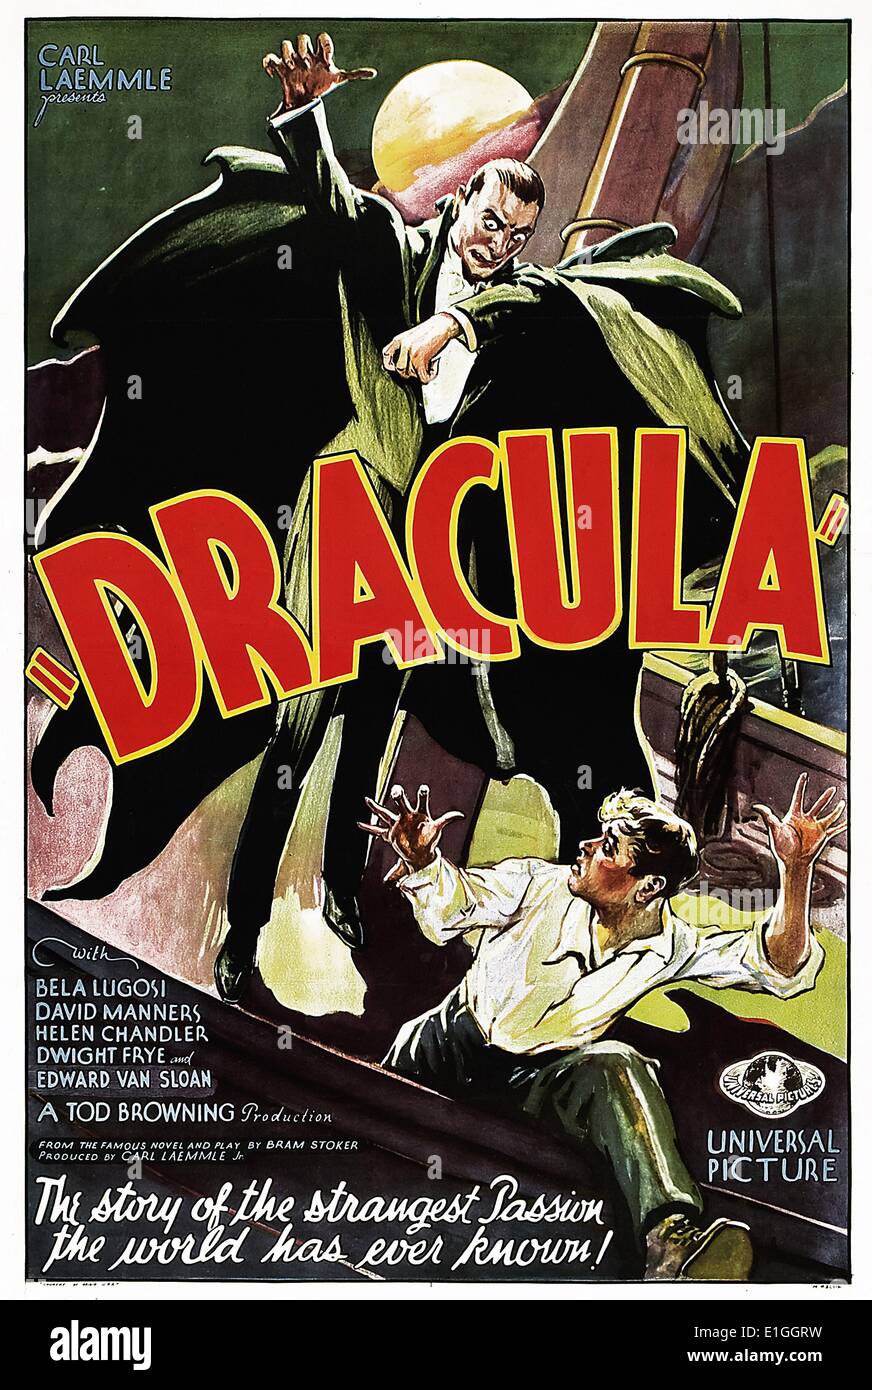 Dracula mit Bela Lugosi, 1931 Vampir-Horror Film. Stockfoto